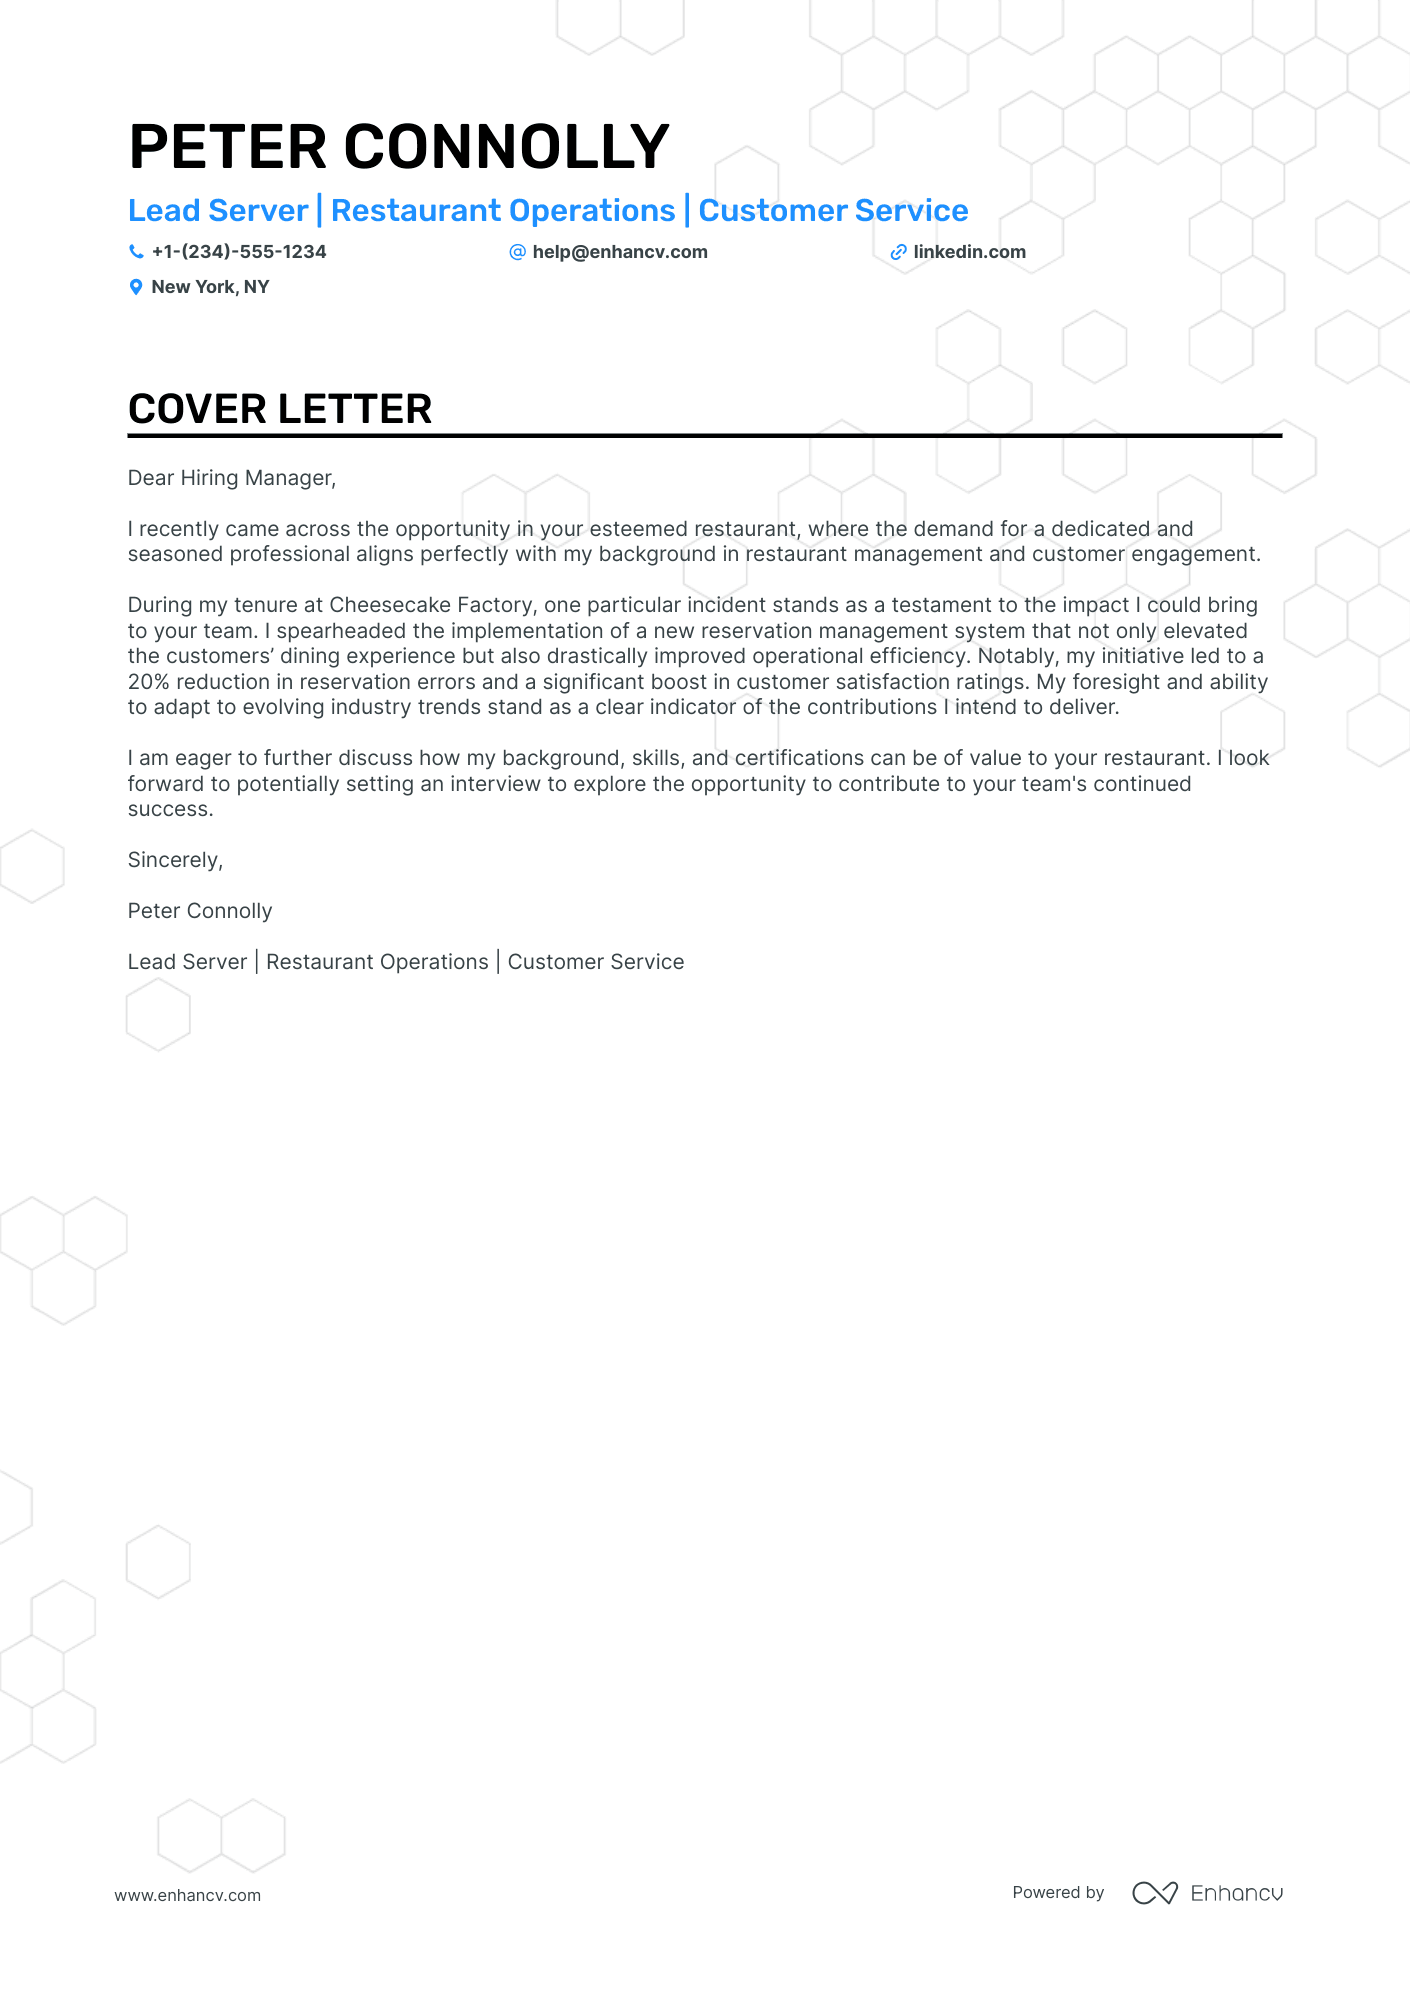 Lead Server cover letter